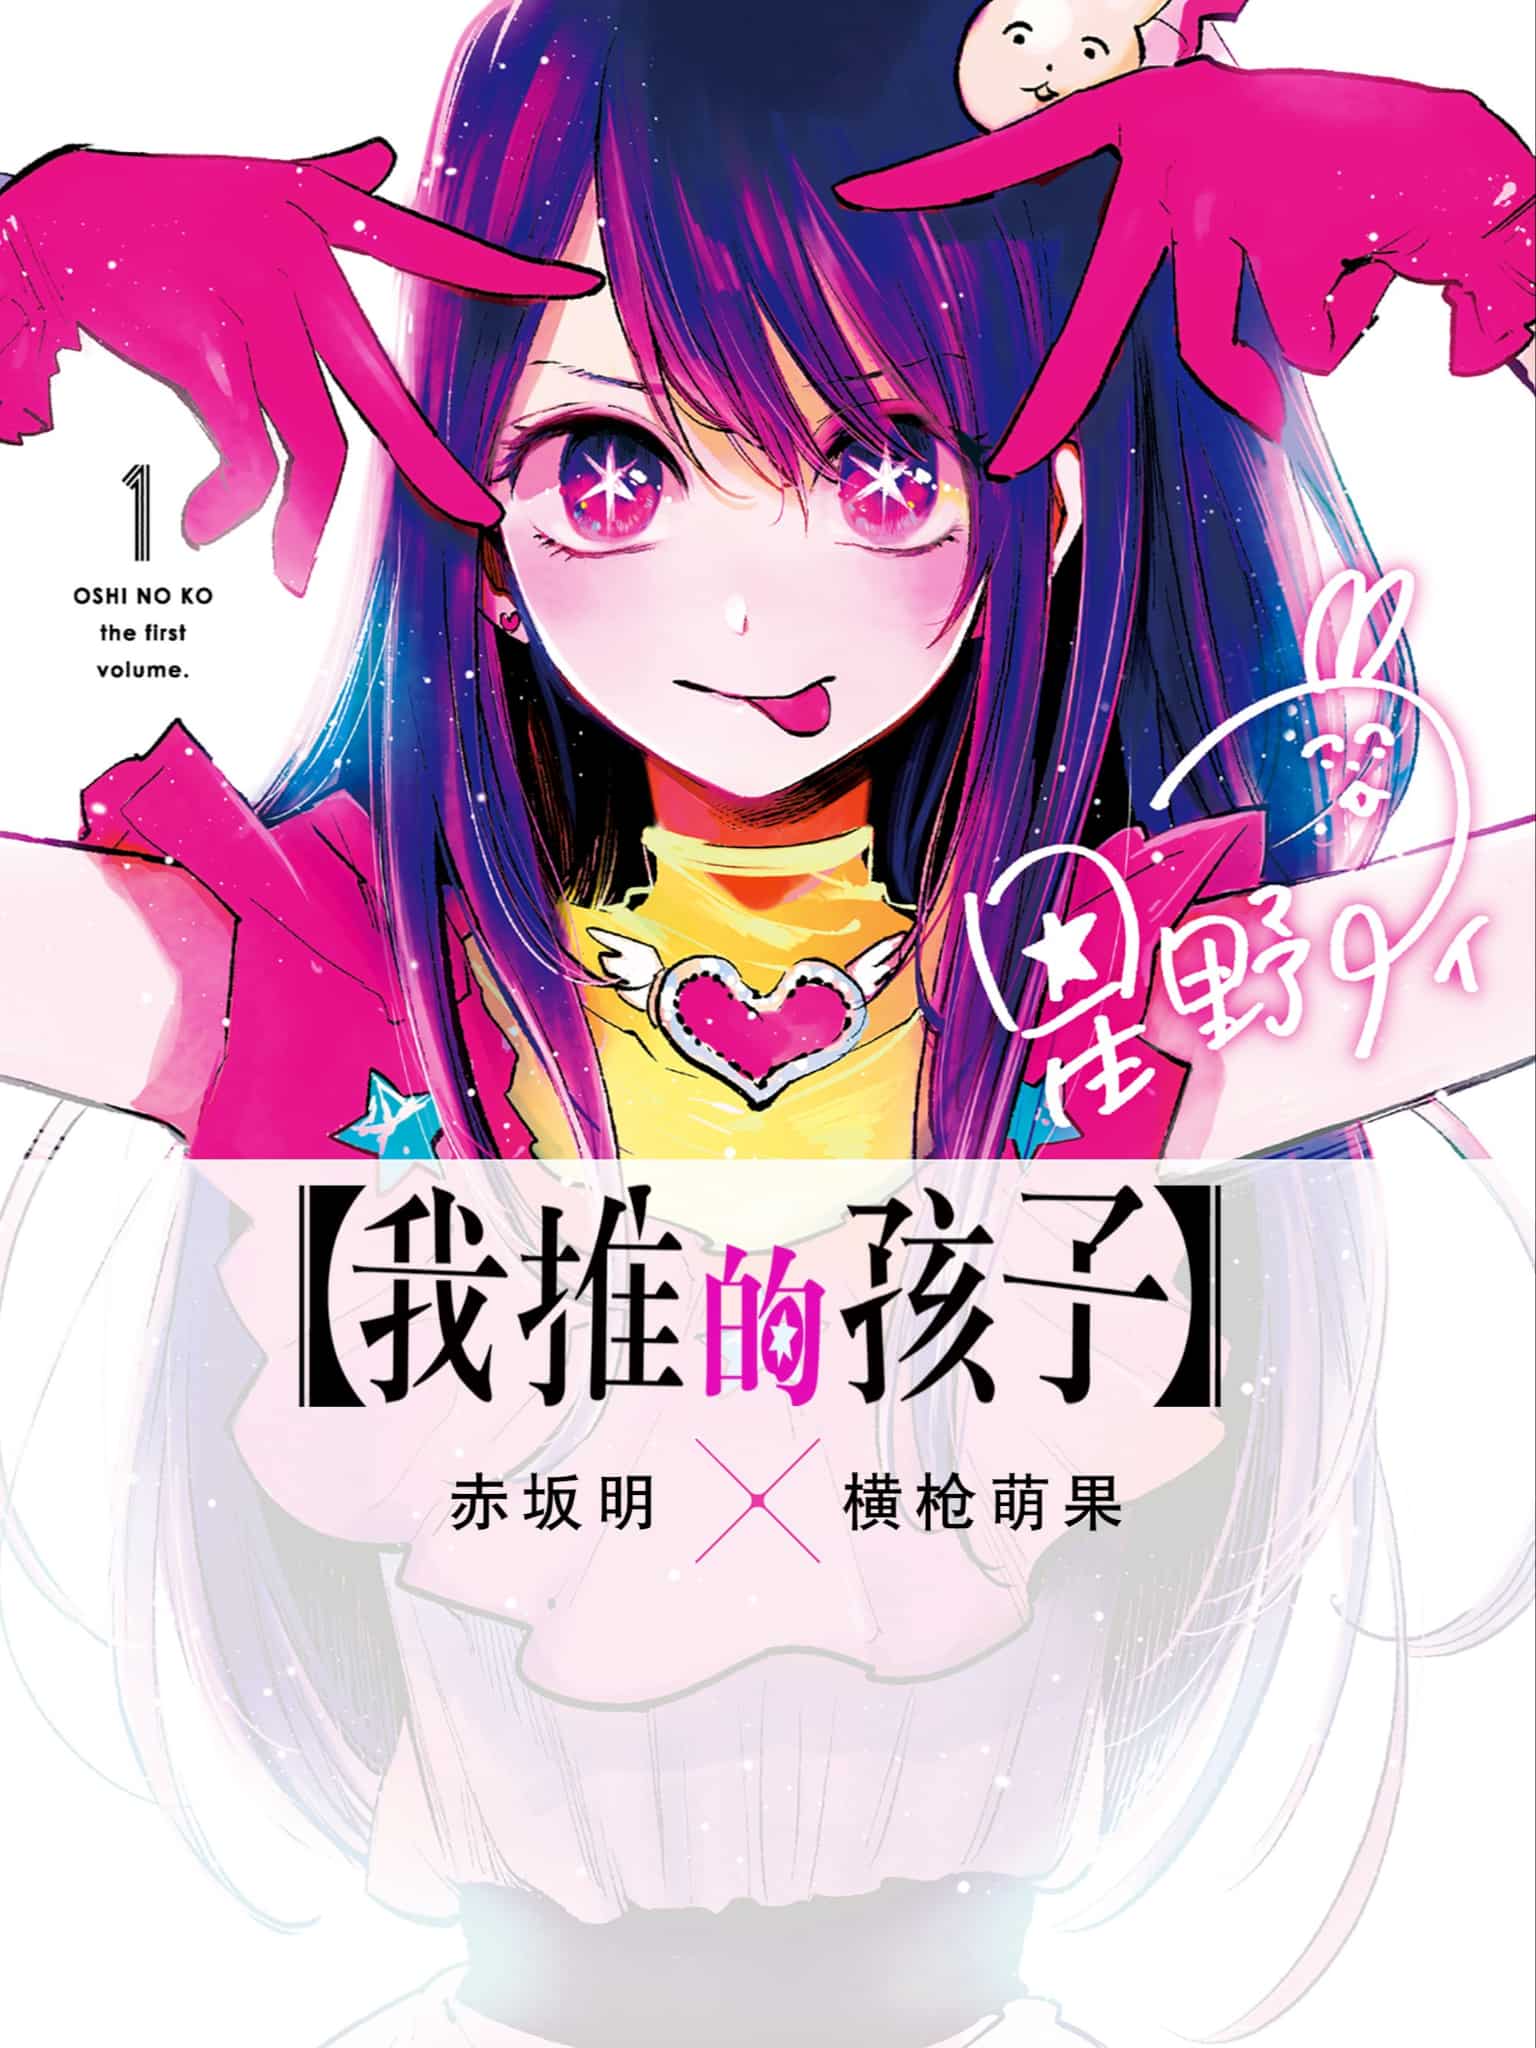 Annonce de la date de sortie du manga Oshi no Ko en France par Kurokawa